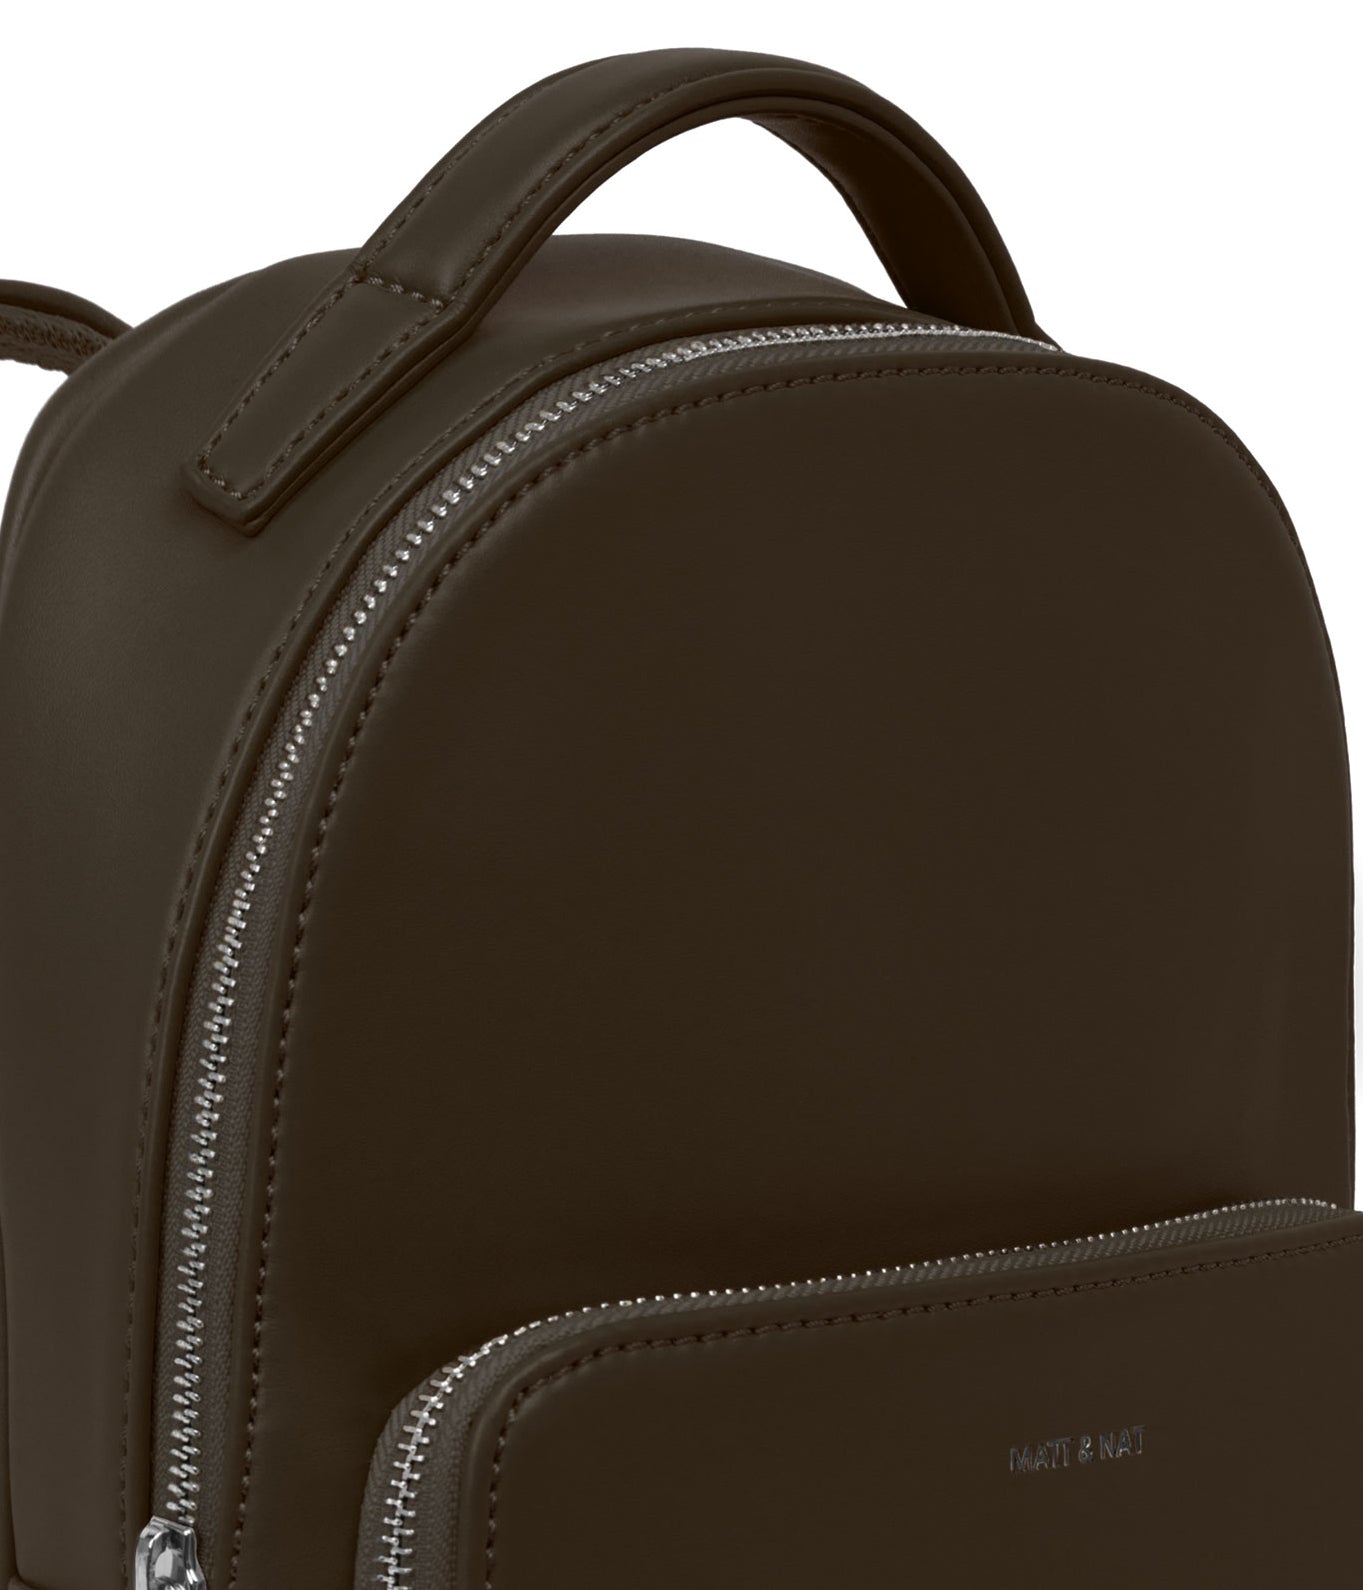 CAROSM Small Vegan Backpack - Loom | Color: Brown - variant::espresso